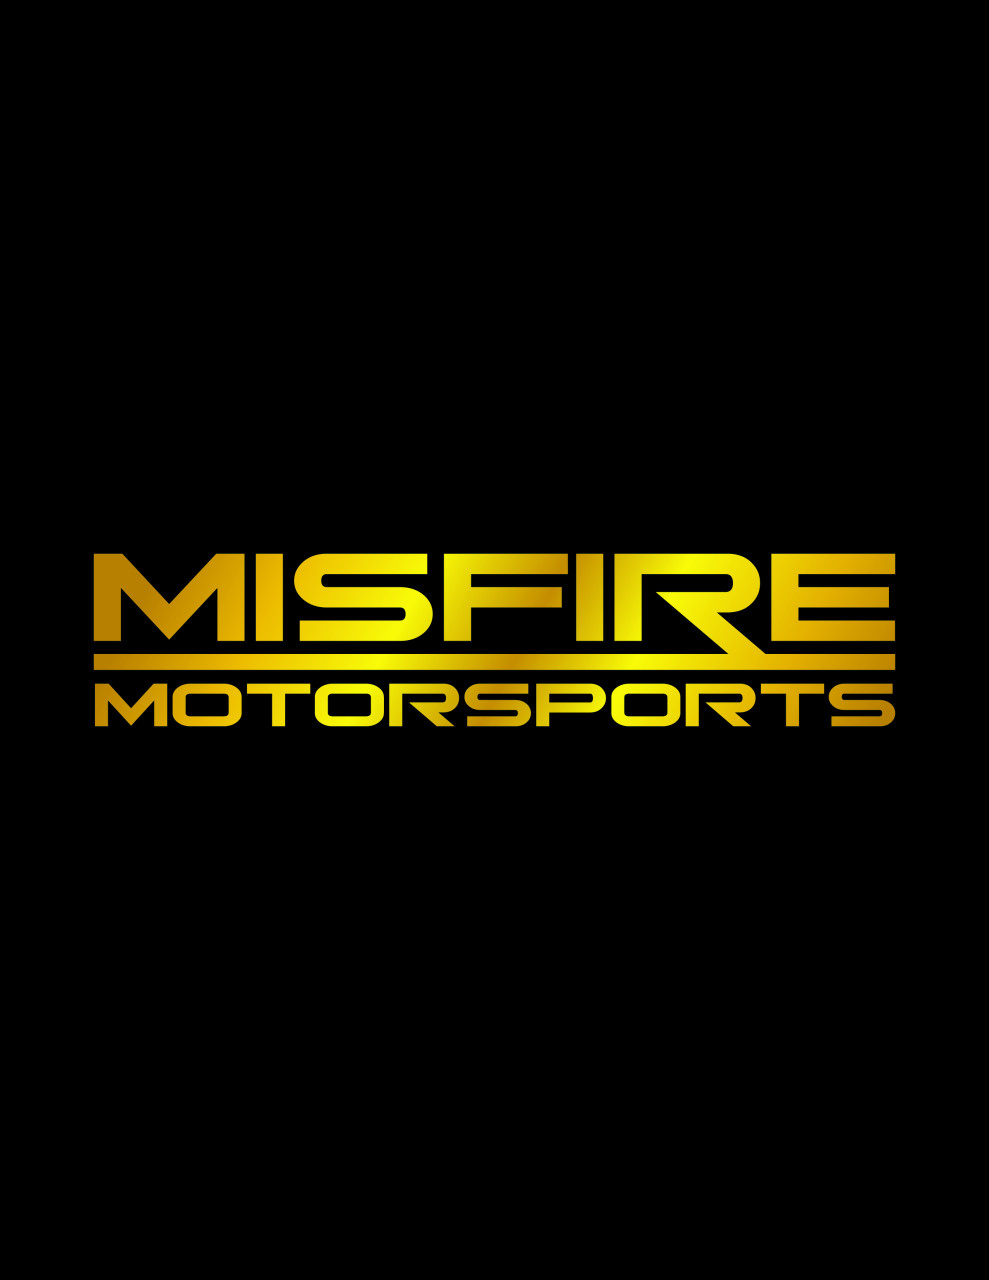 Misfire Motorsports